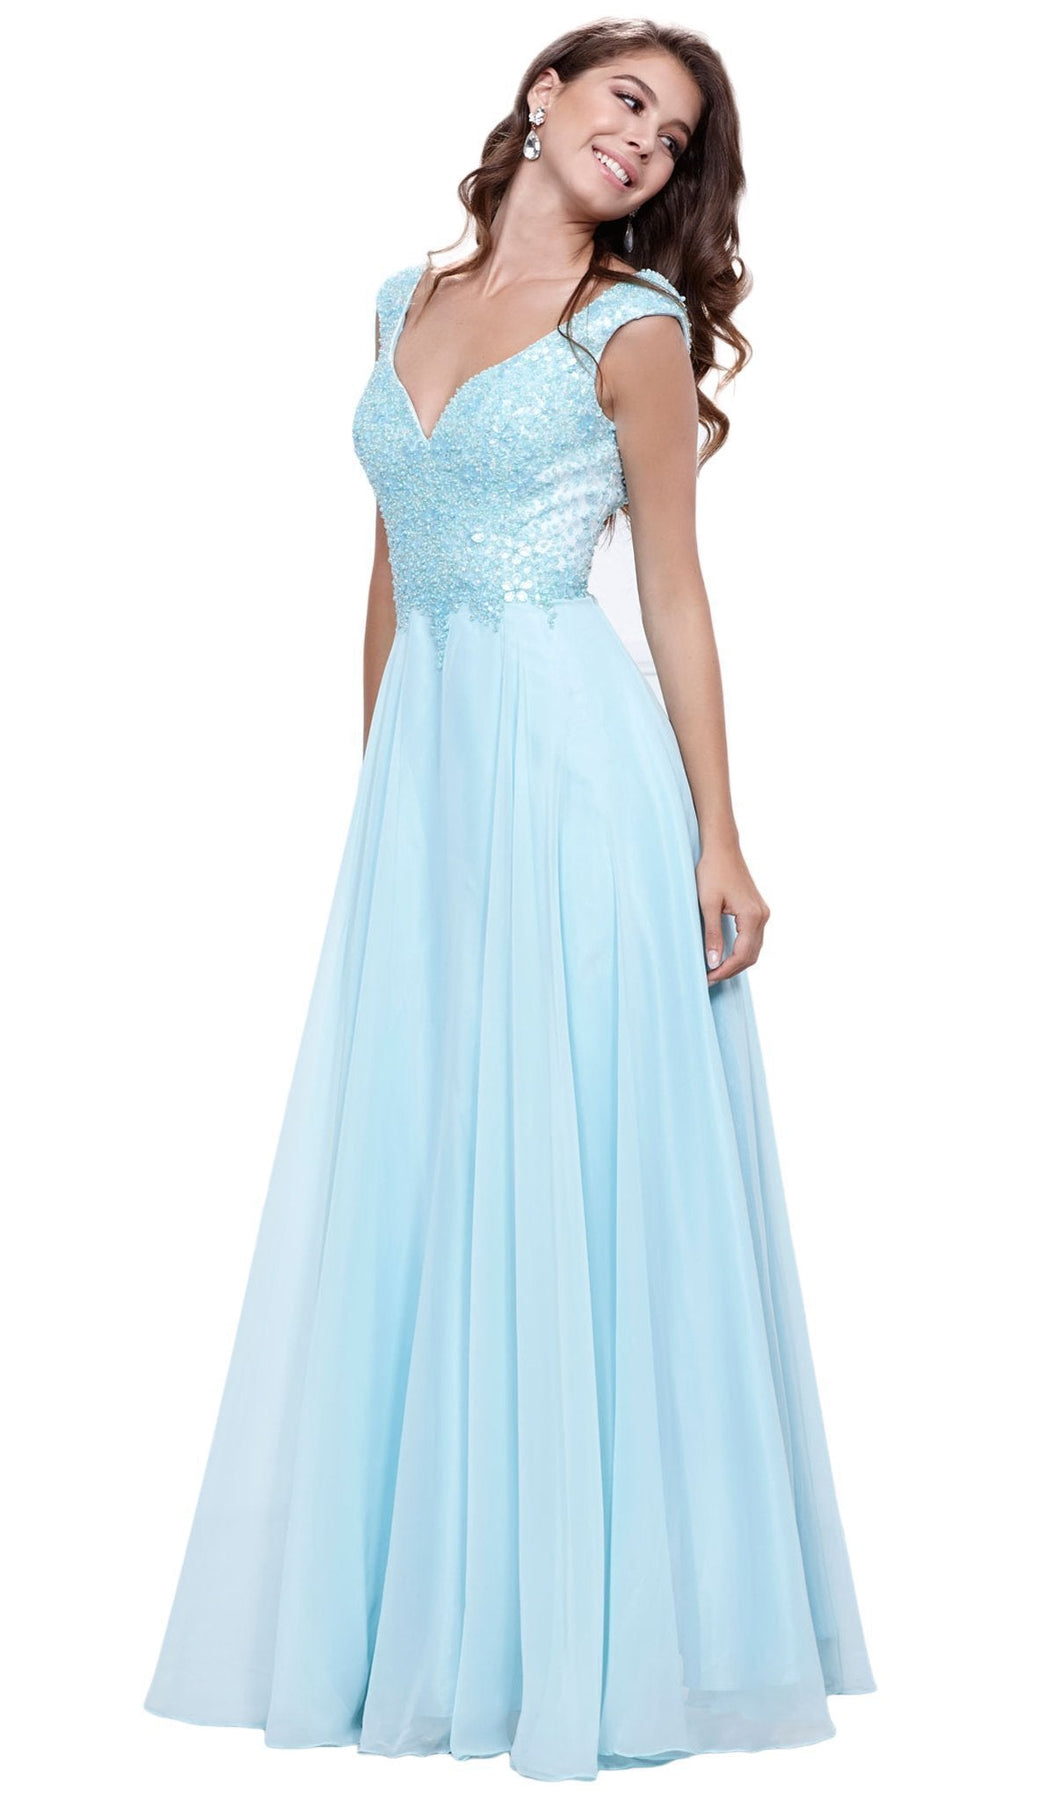 Nox Anabel - 8302 Adorned Lace Bodice Sleeveless Chiffon Dress Special Occasion Dress XS / Ice Blue